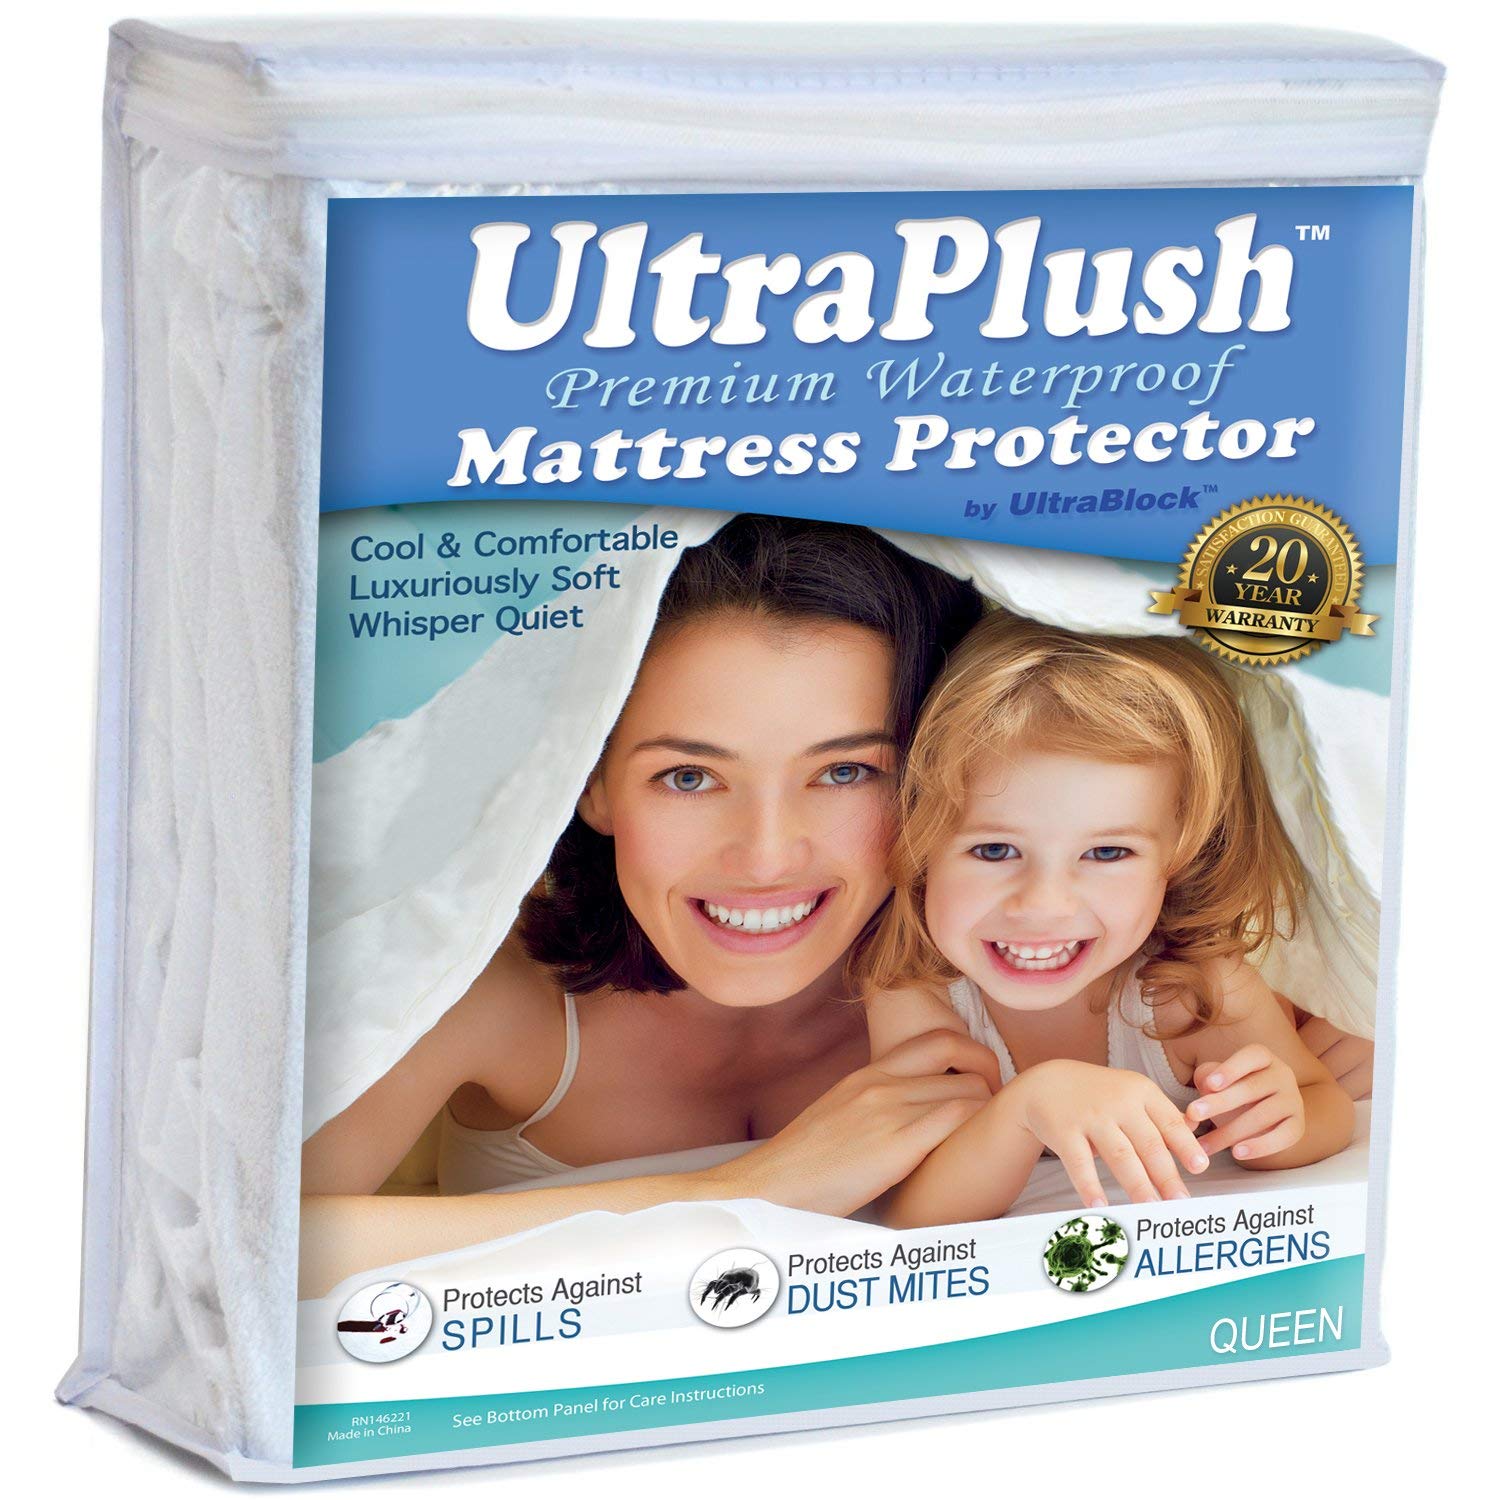 UltraPlush Premium Waterproof Mattress Protector review